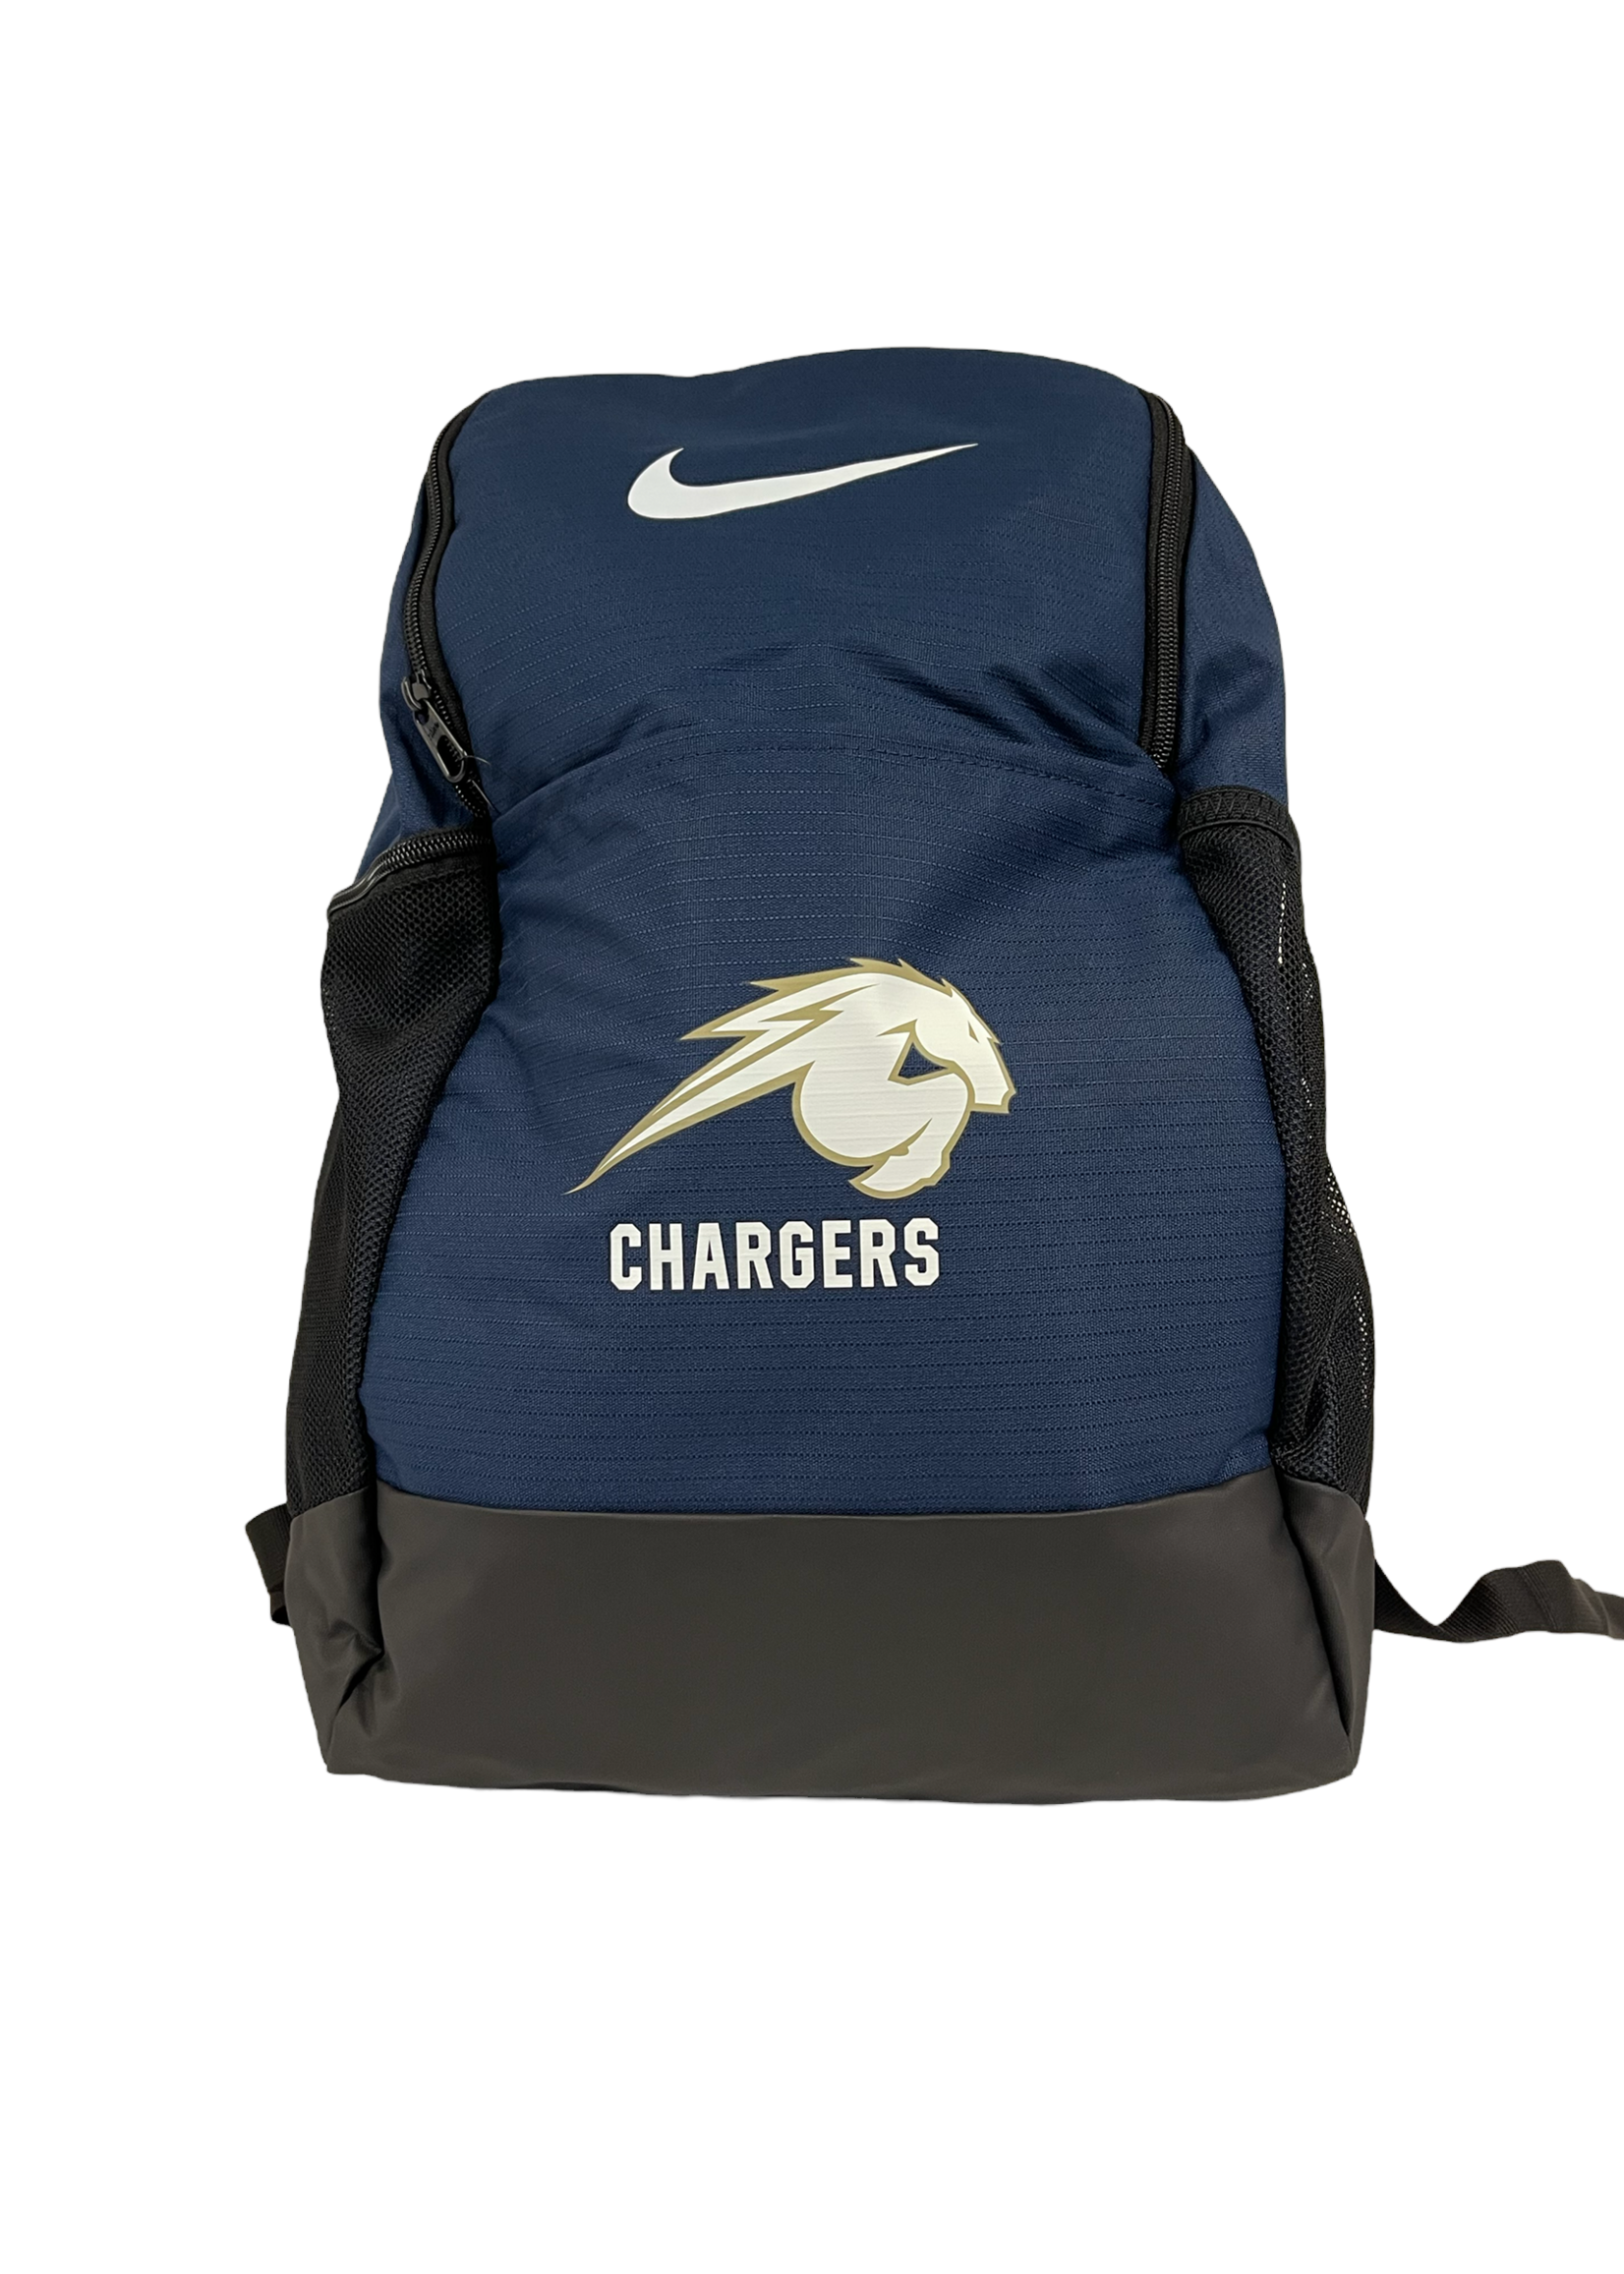 Nike Charger Brasilia Backpack